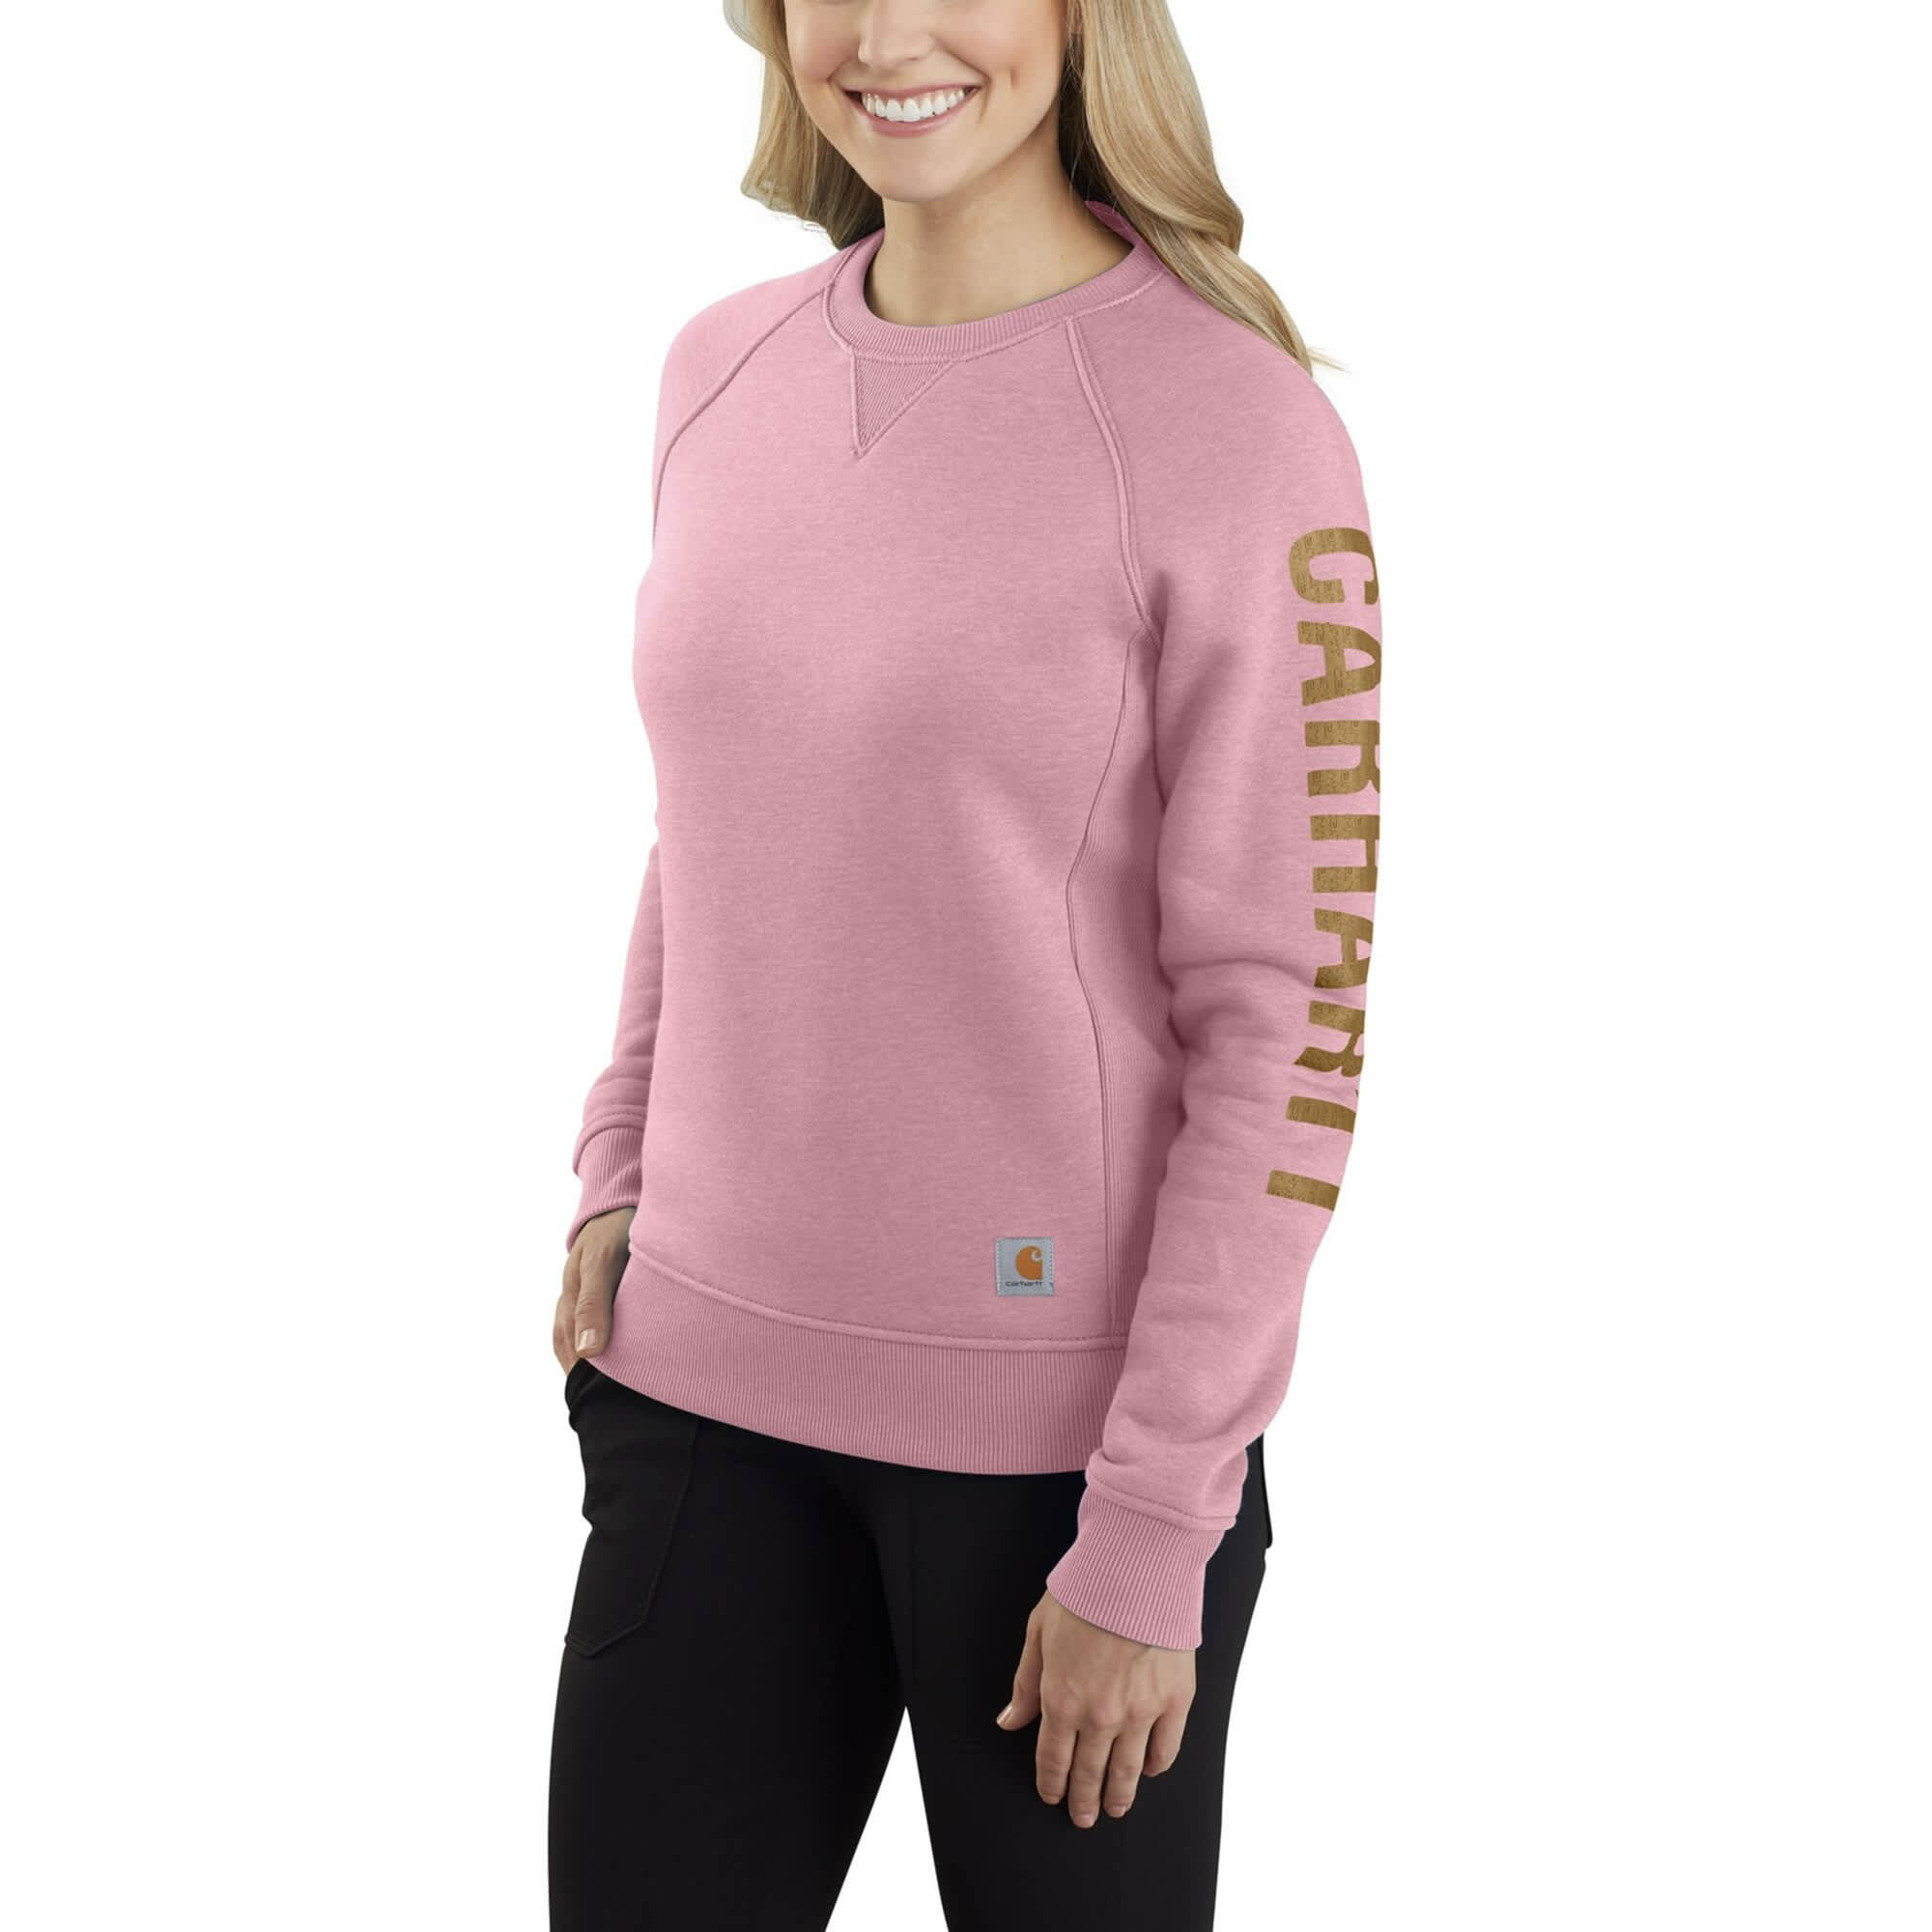 Carhartt® Women’s Relaxed Fit Midweight Crewneck Graphic Sweatshirt